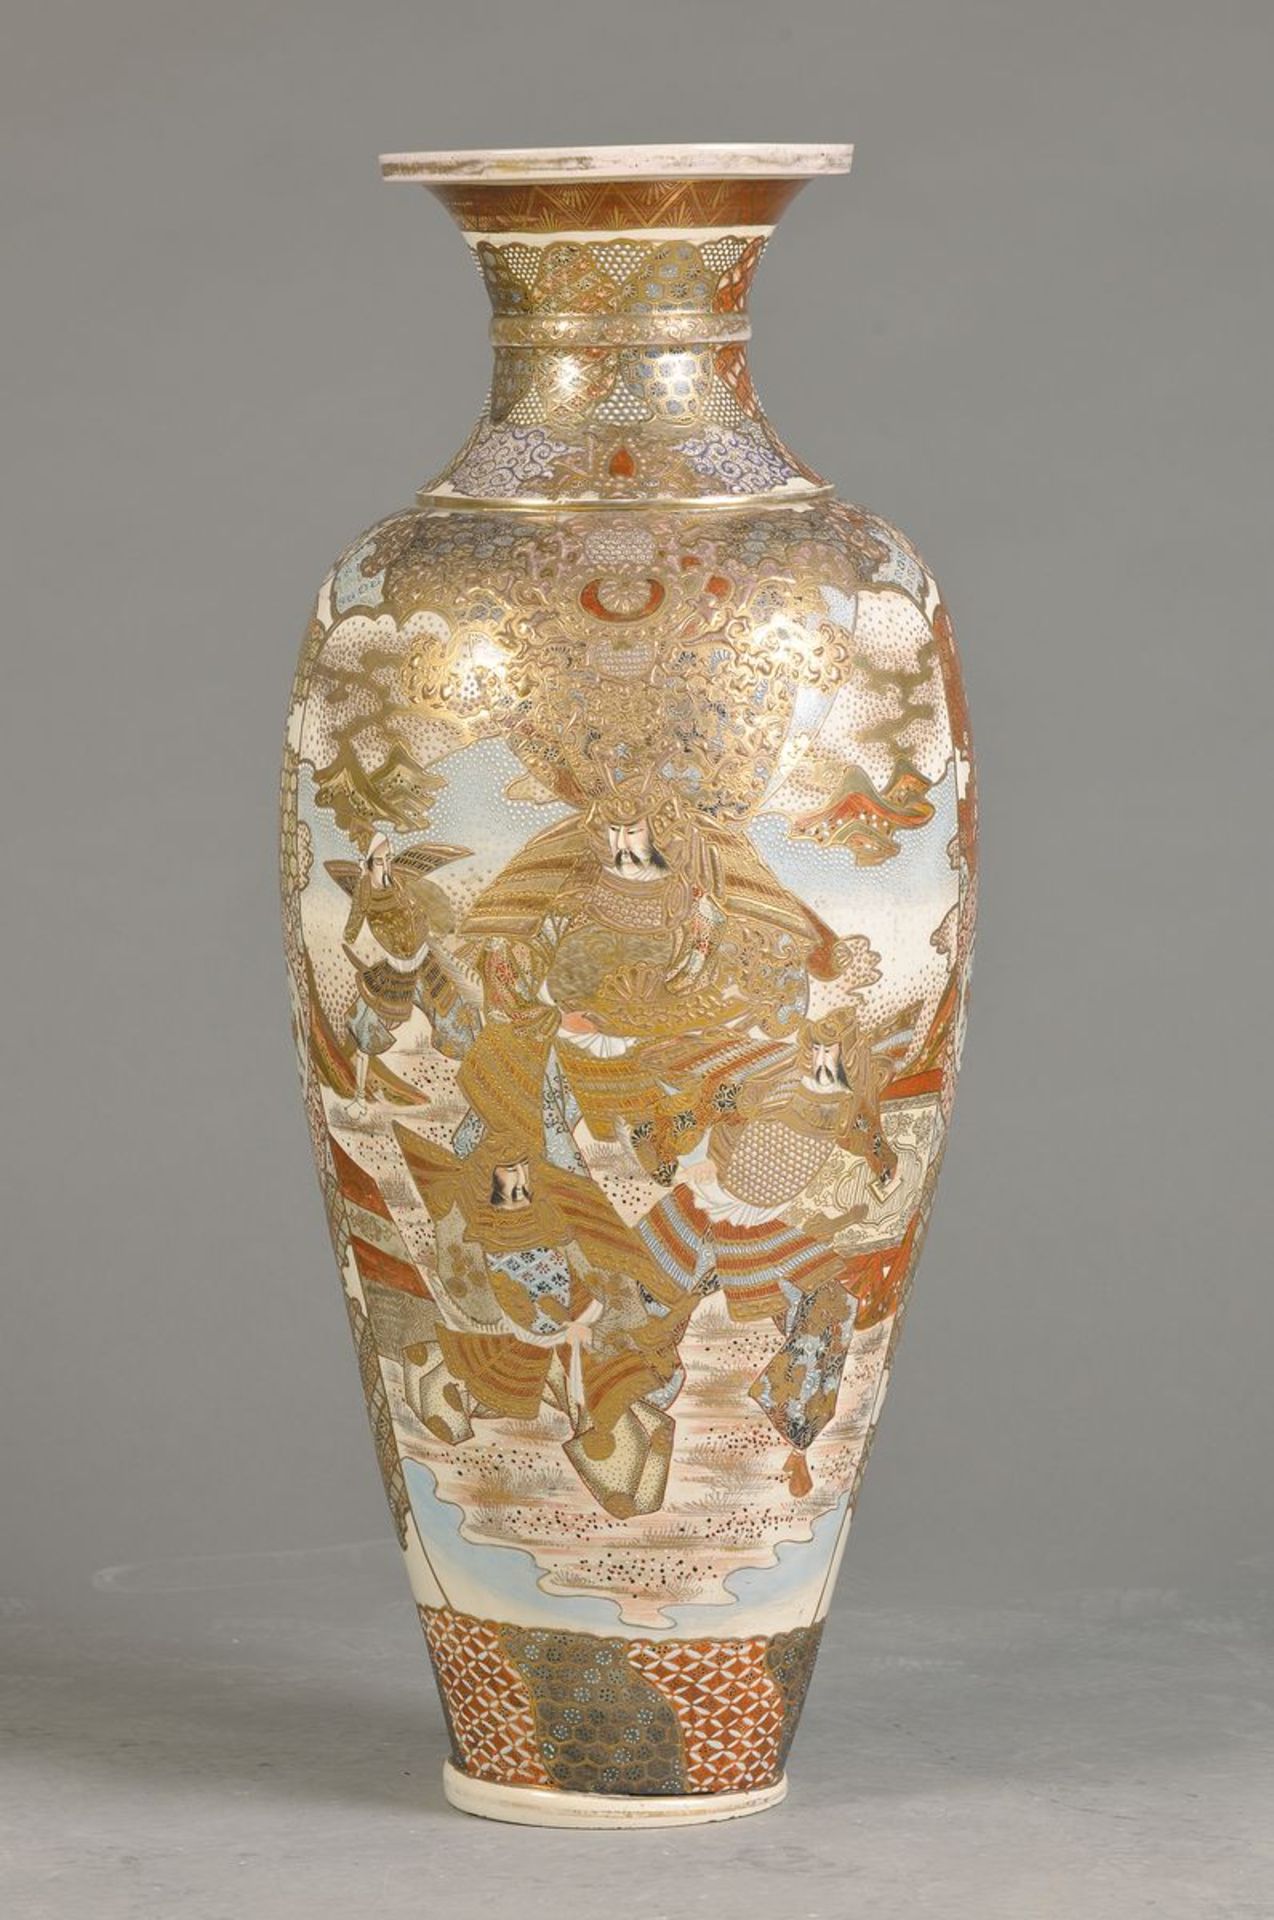 Grosse Vase, Satsuma, Japan, um 1910-25, Steingut, reicher polychromer Dekor in sog.